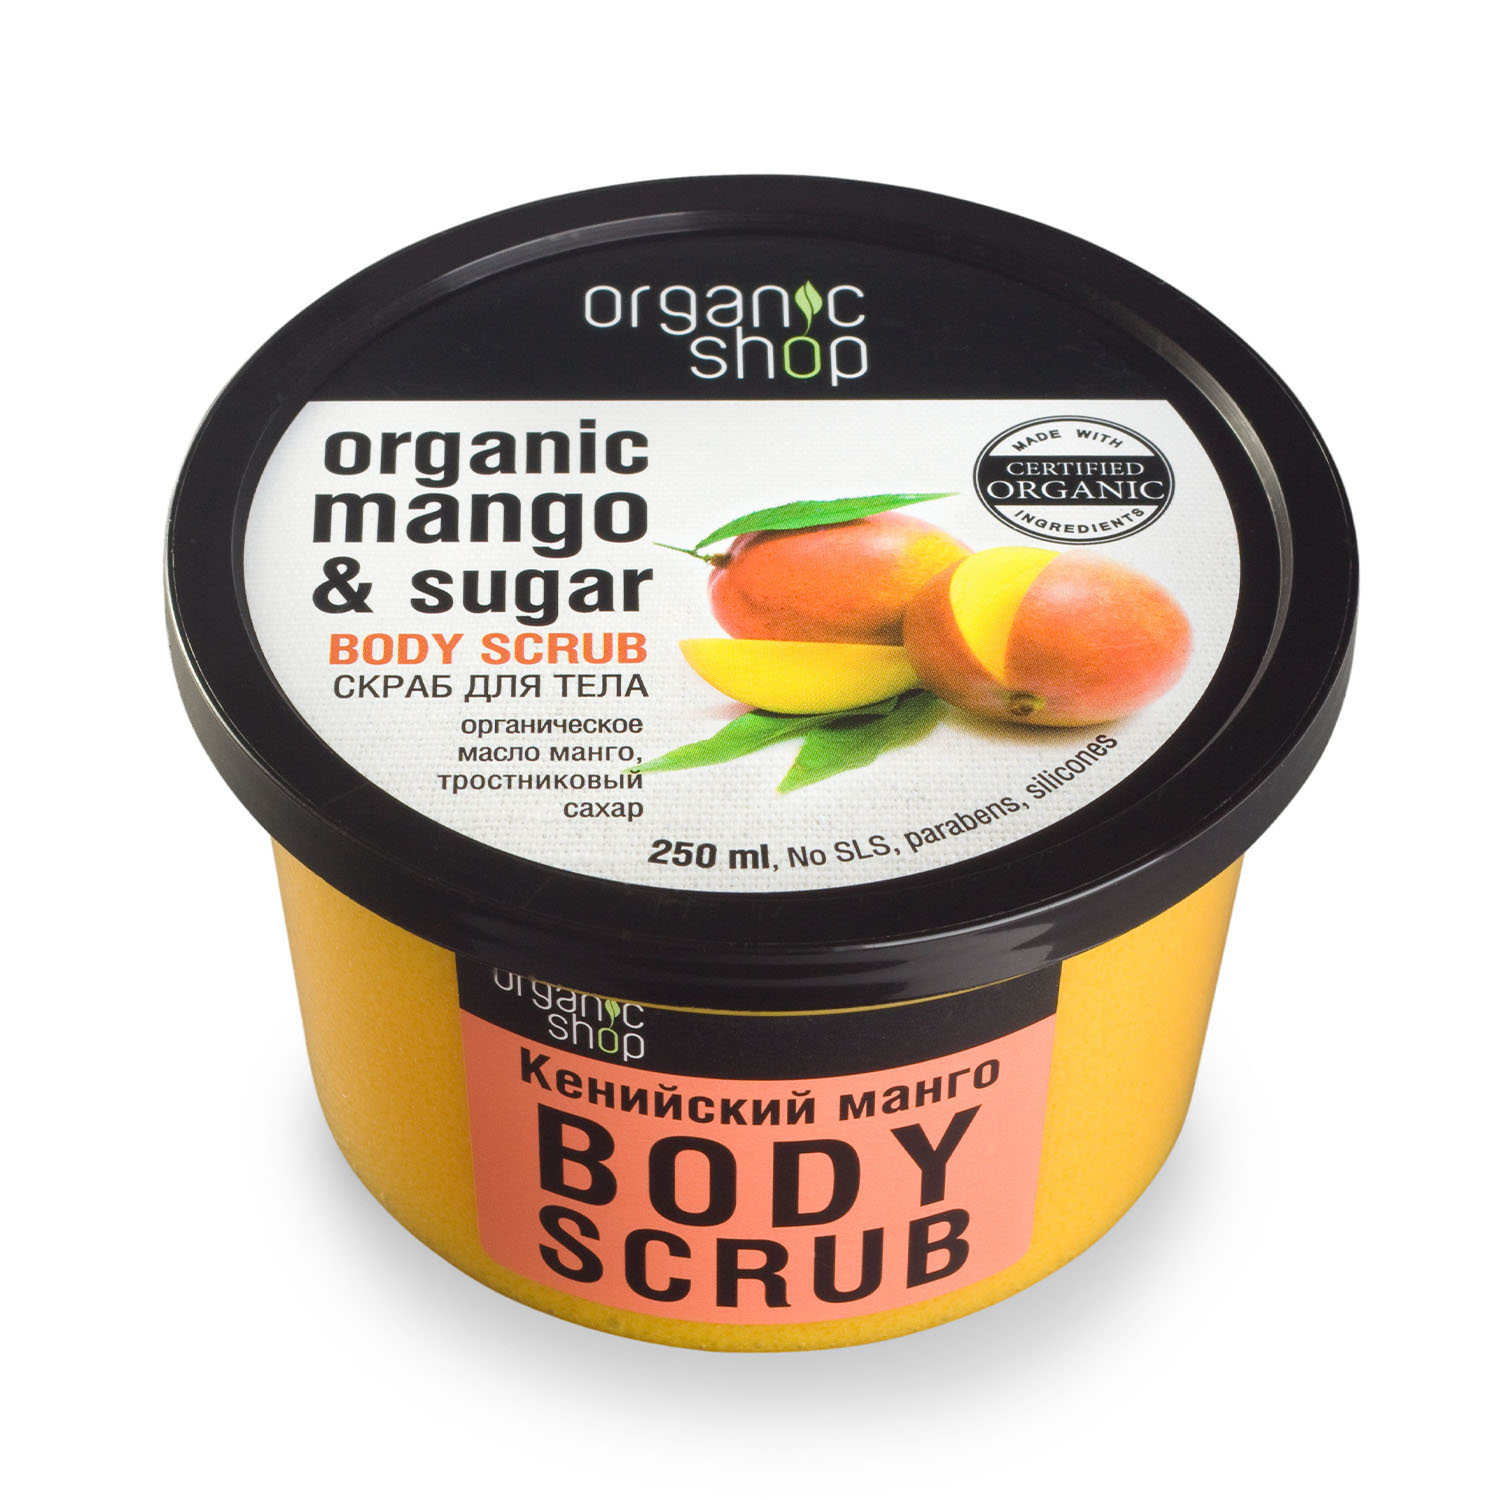 Organic Shop Скраб для тела Кенийский манго, 250 мл (Organic Shop, Классика) organic shop скраб для тела кенийский манго 250 мл